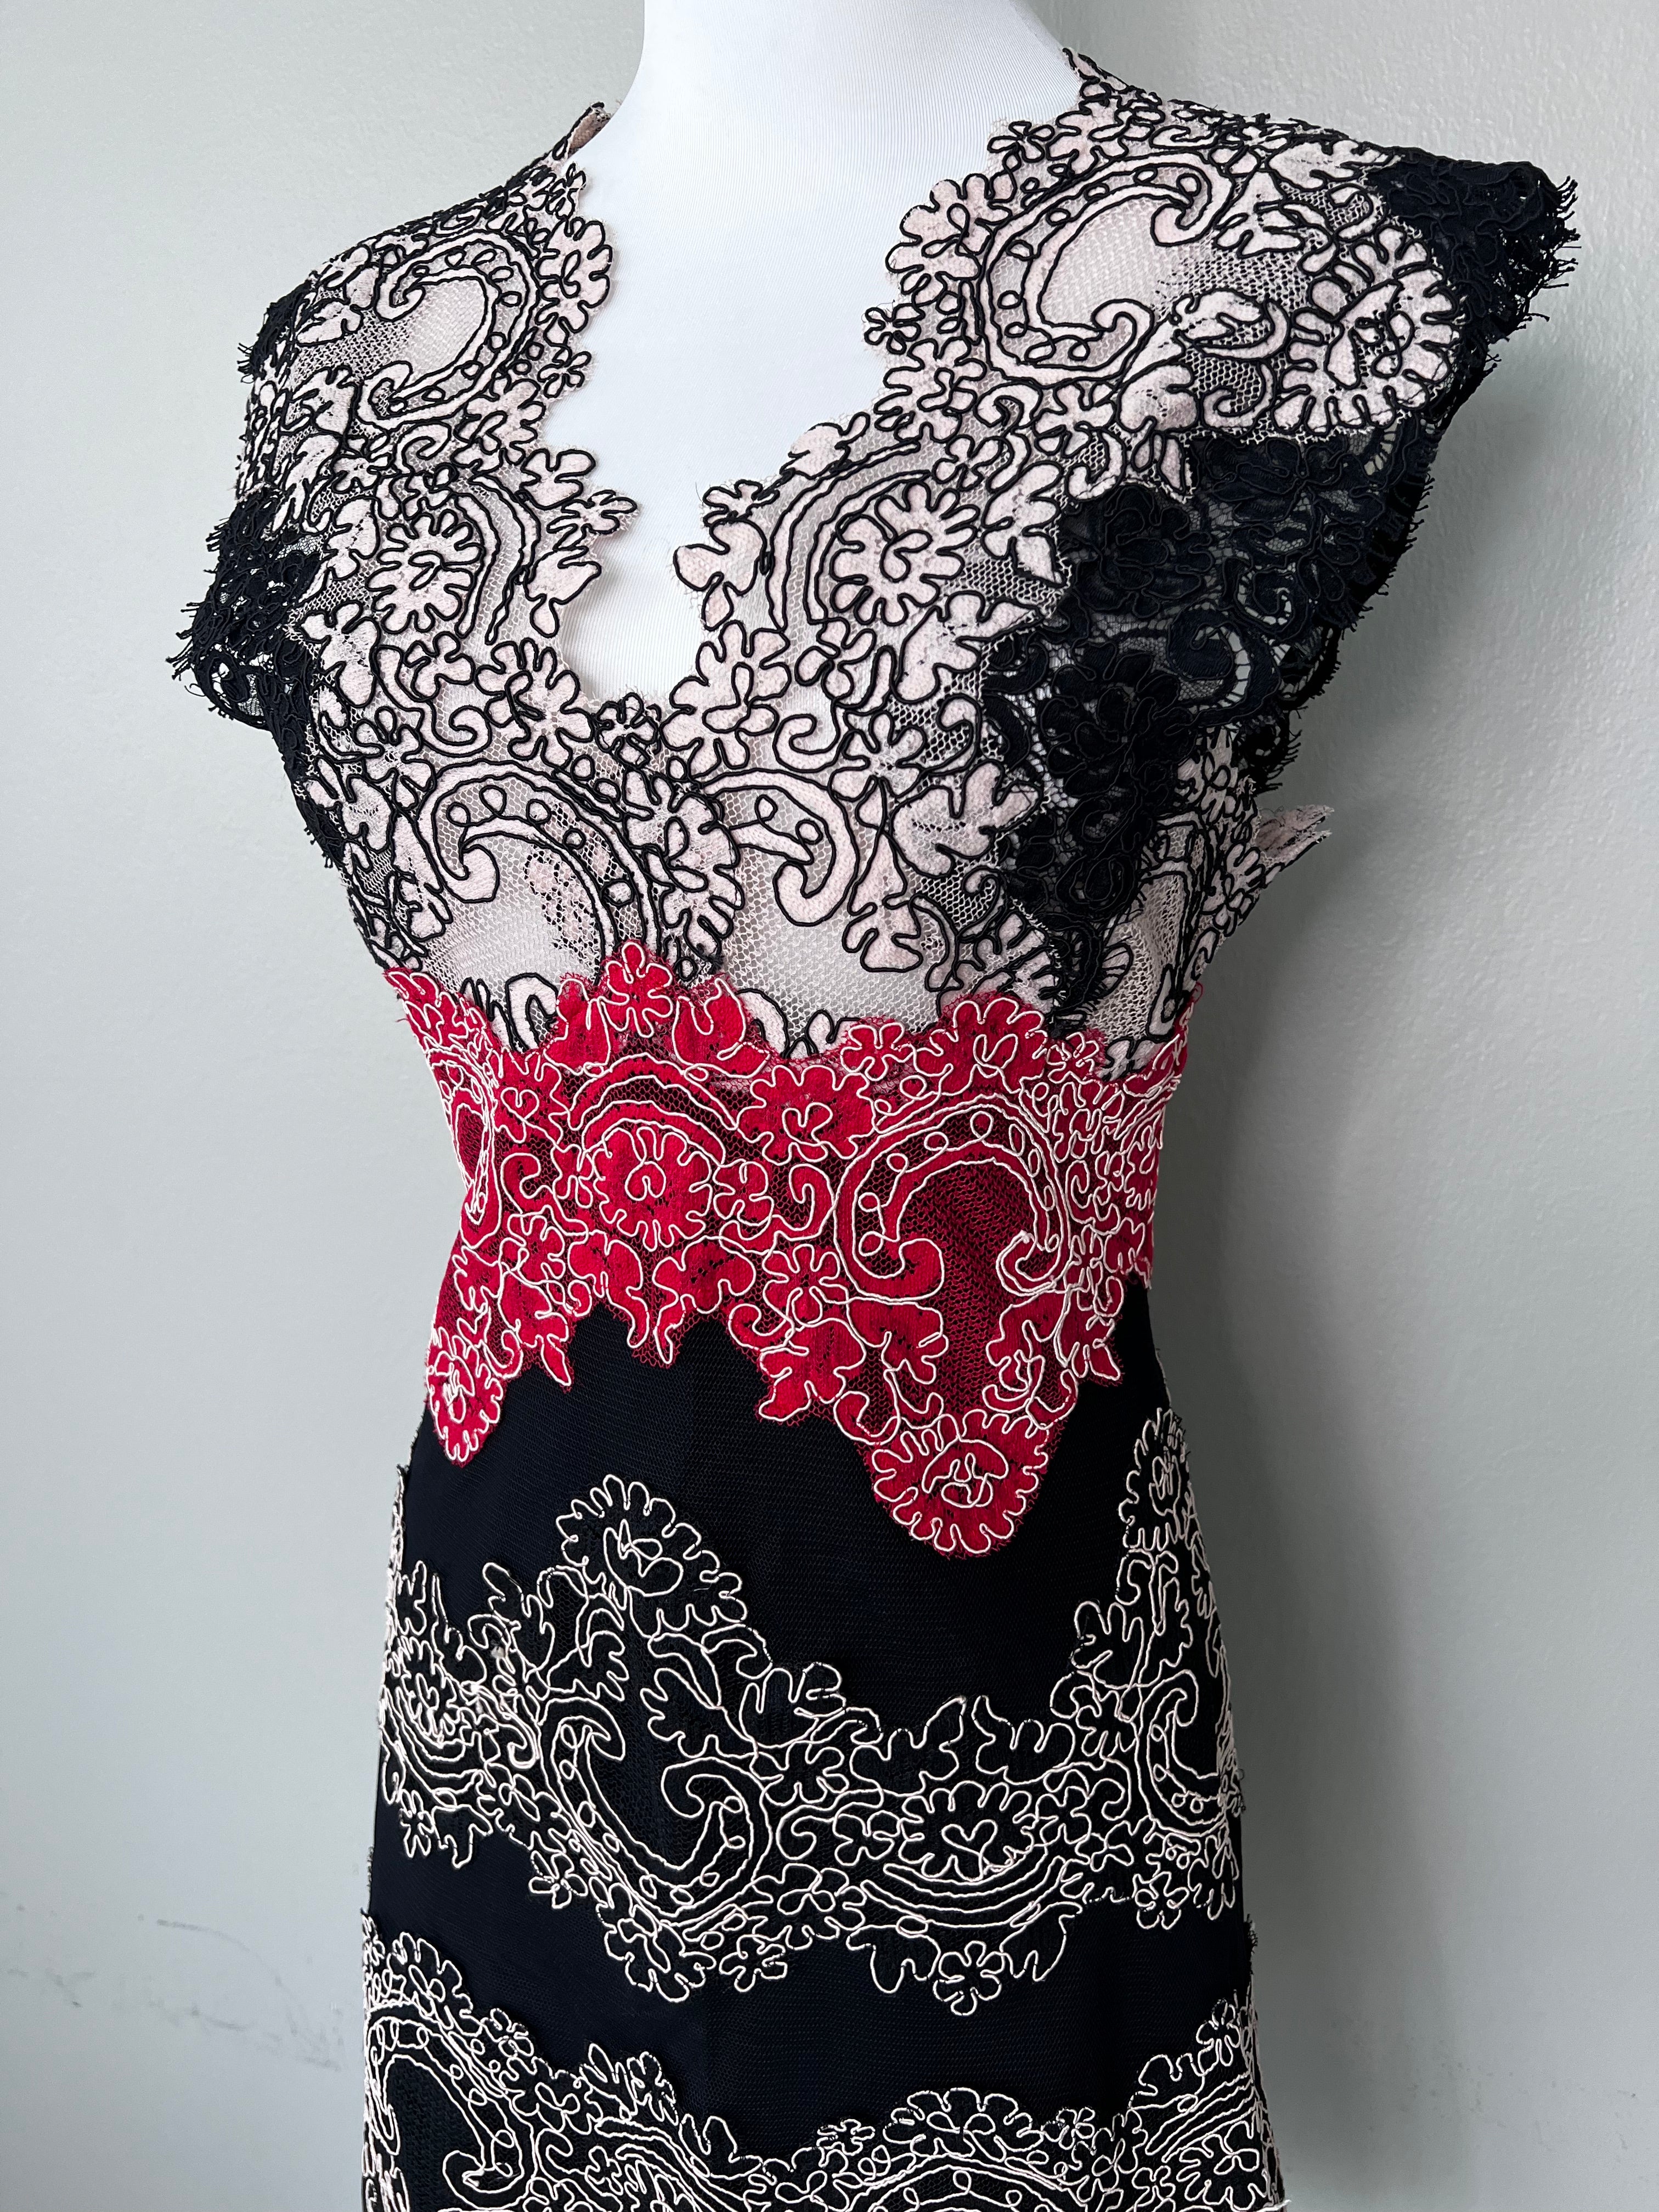 brand new! multicolored flower line patterned dress - SANDRO